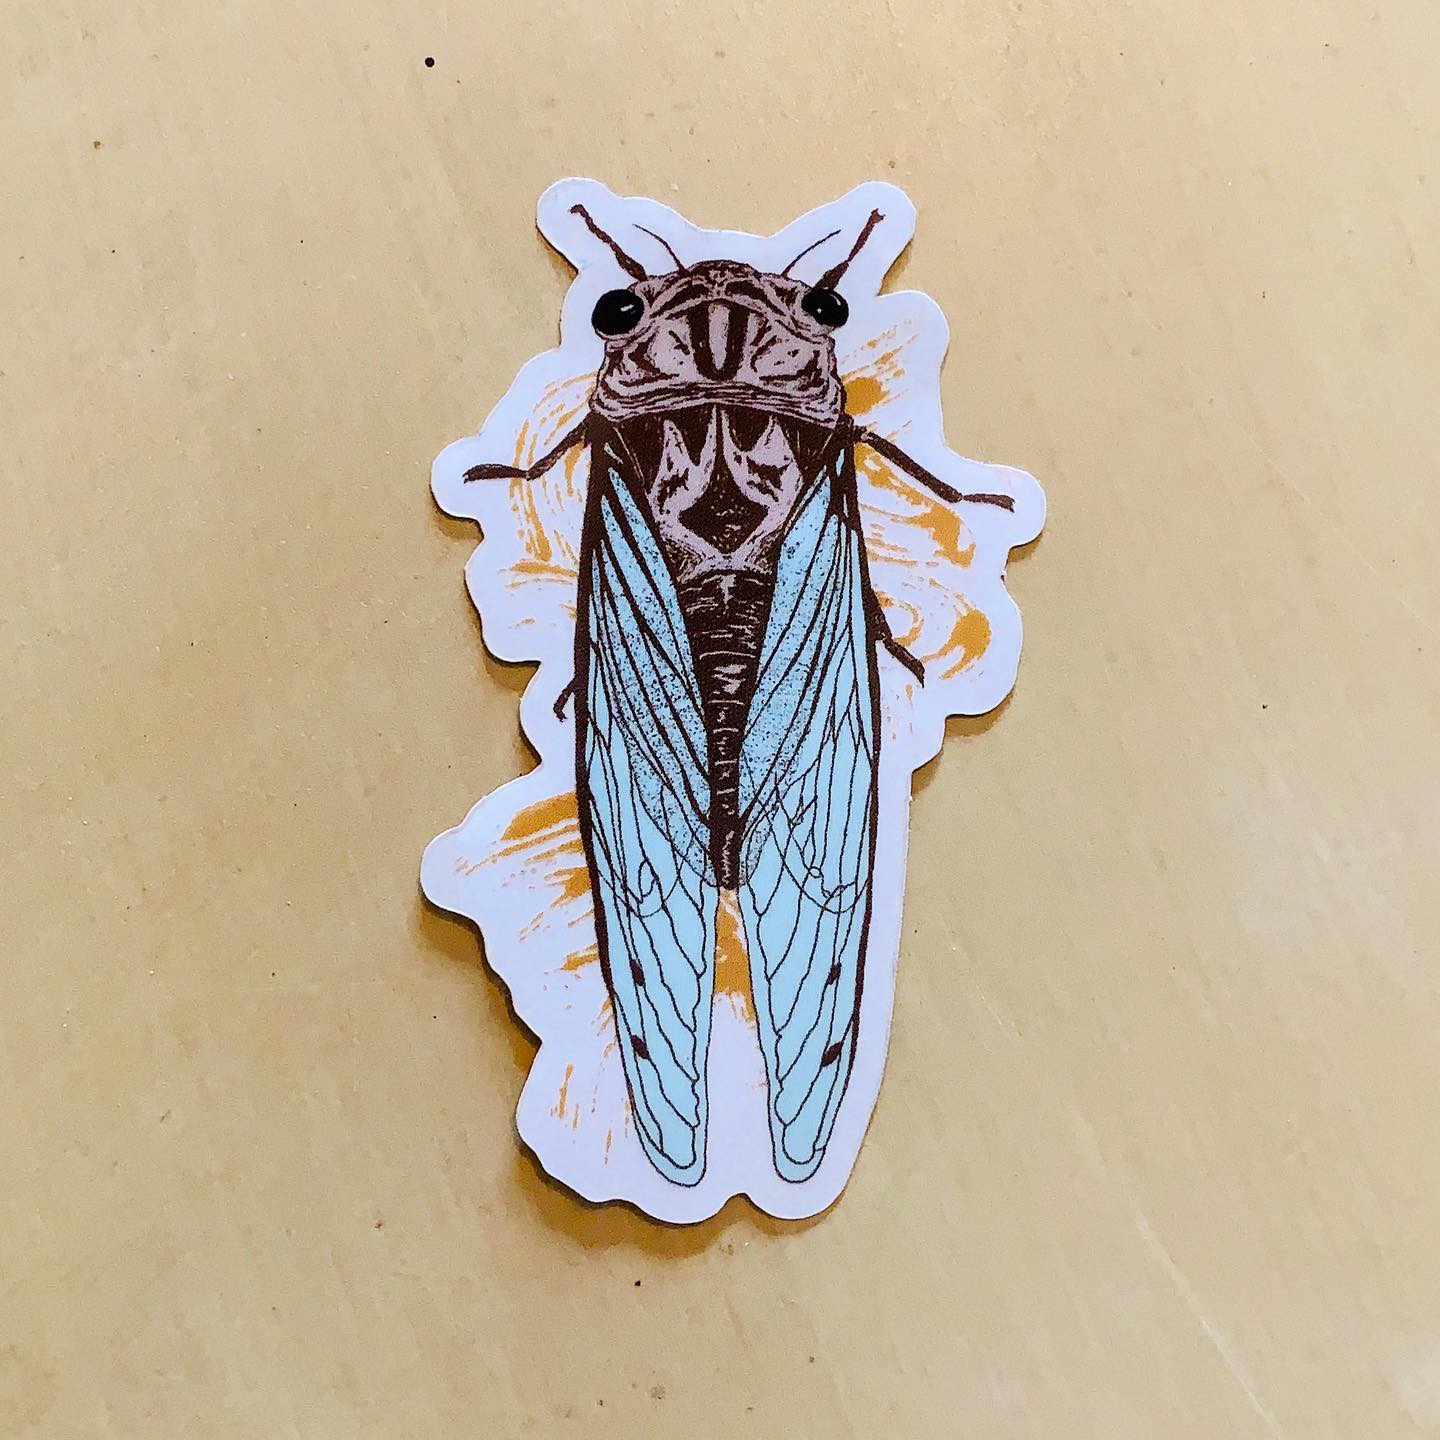 Cicada decal